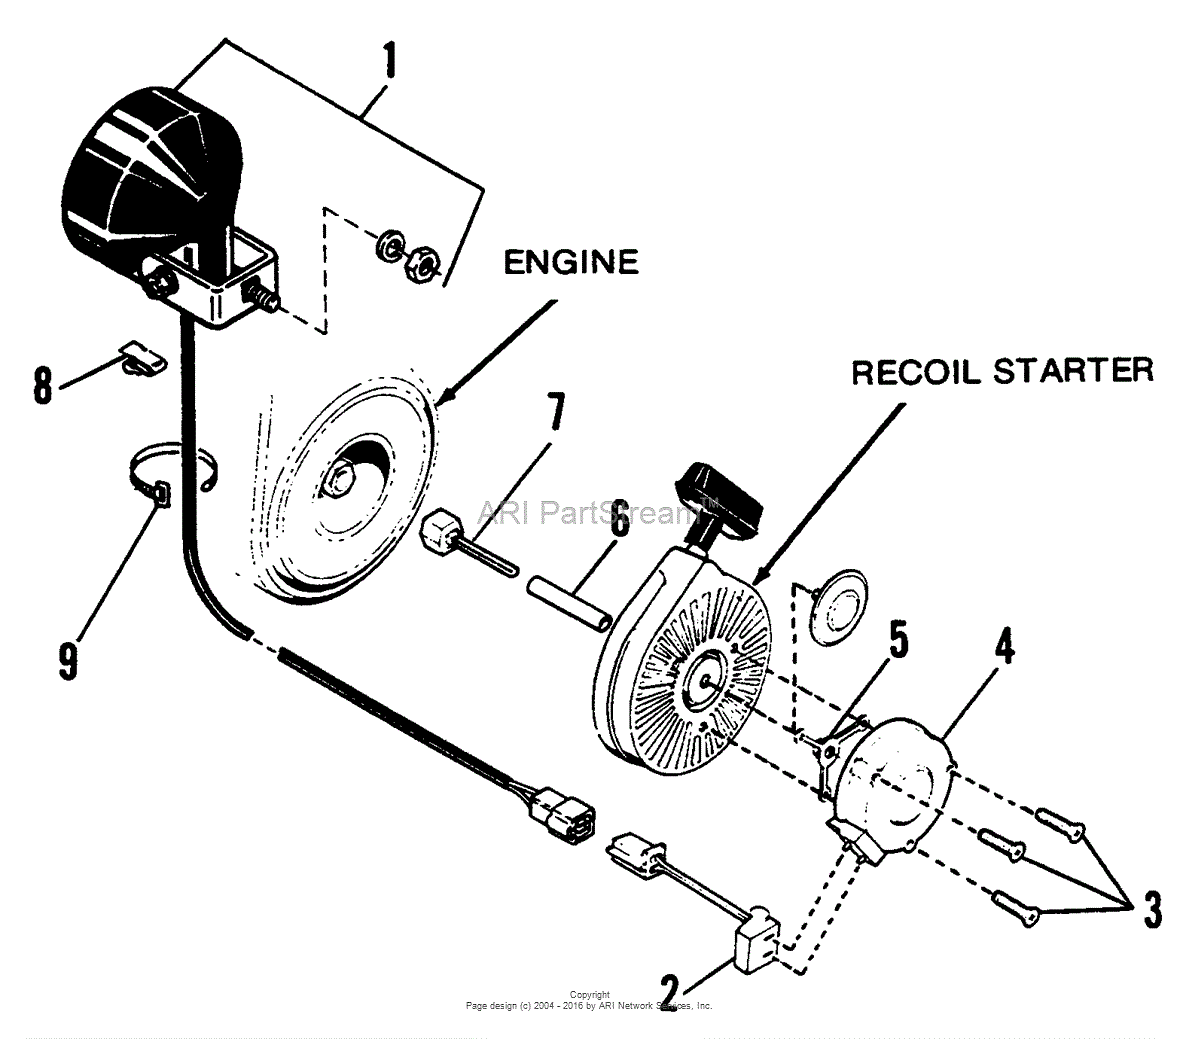 Wiring Manual PDF: 2004 Honda Cr V Headlight Wiring